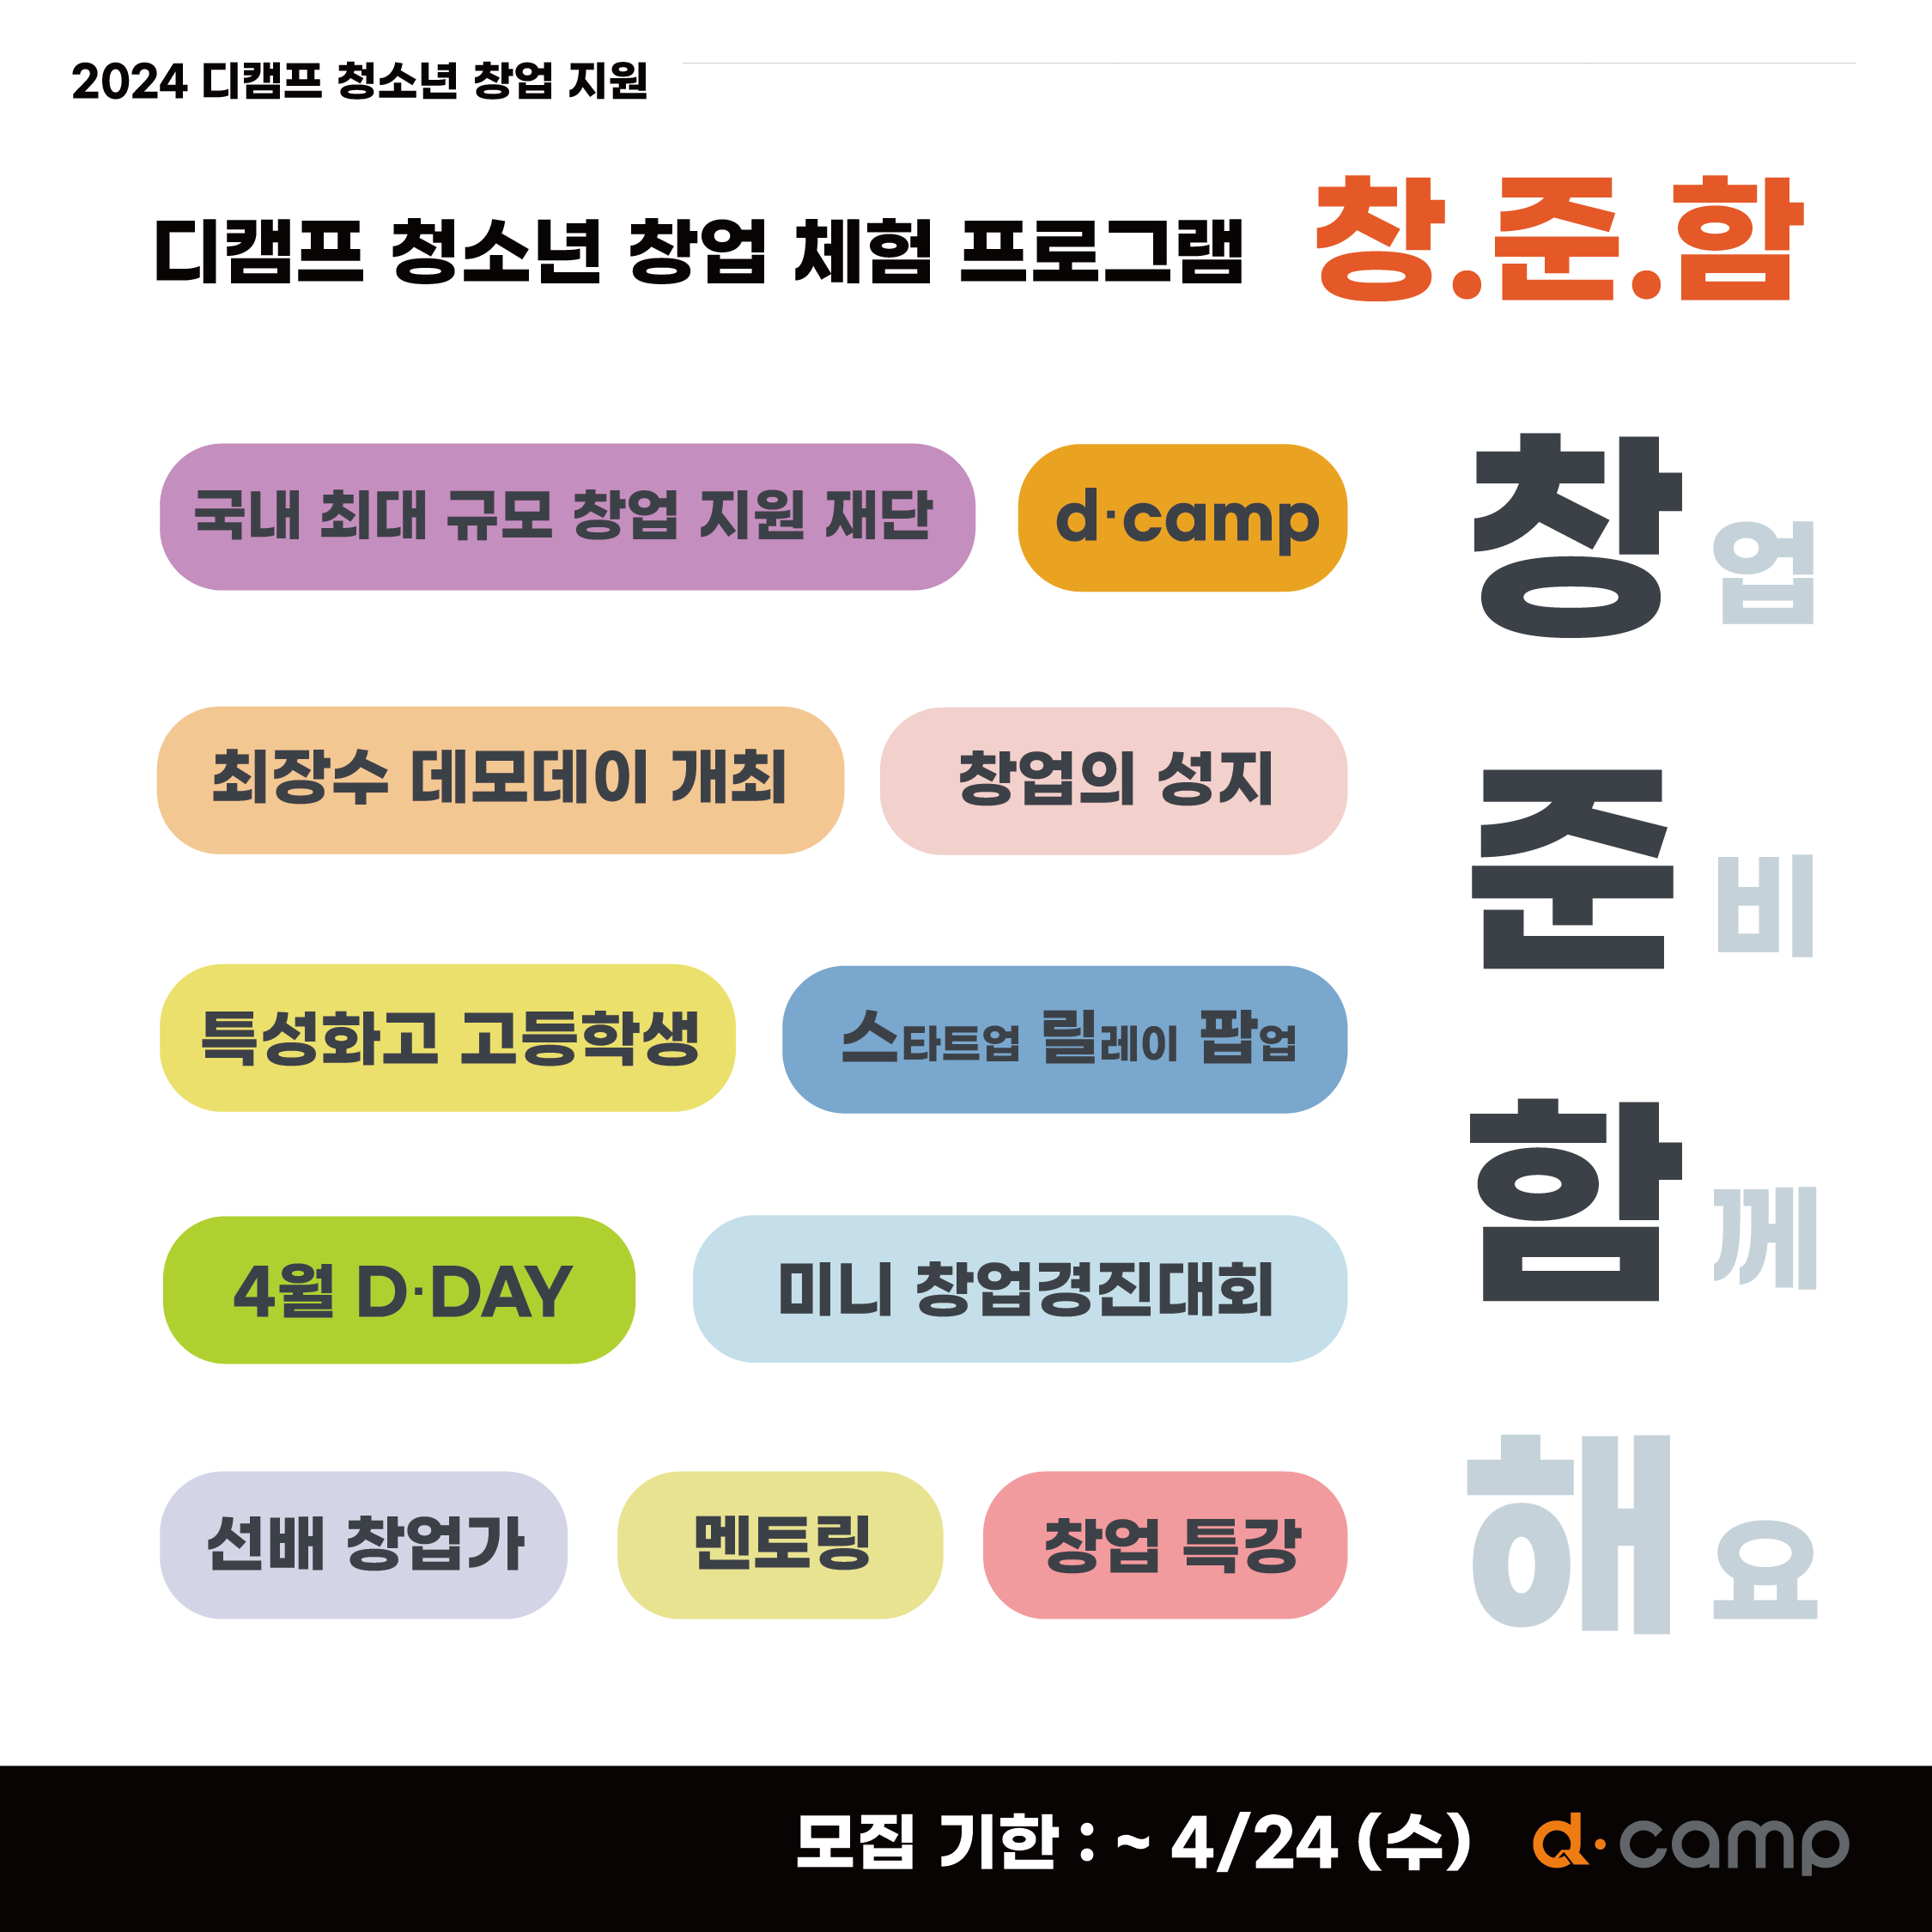 [d·camp] 청소년 창업 체험 프로그램 '창.준.함' 참여자 모집 의 웹포스터